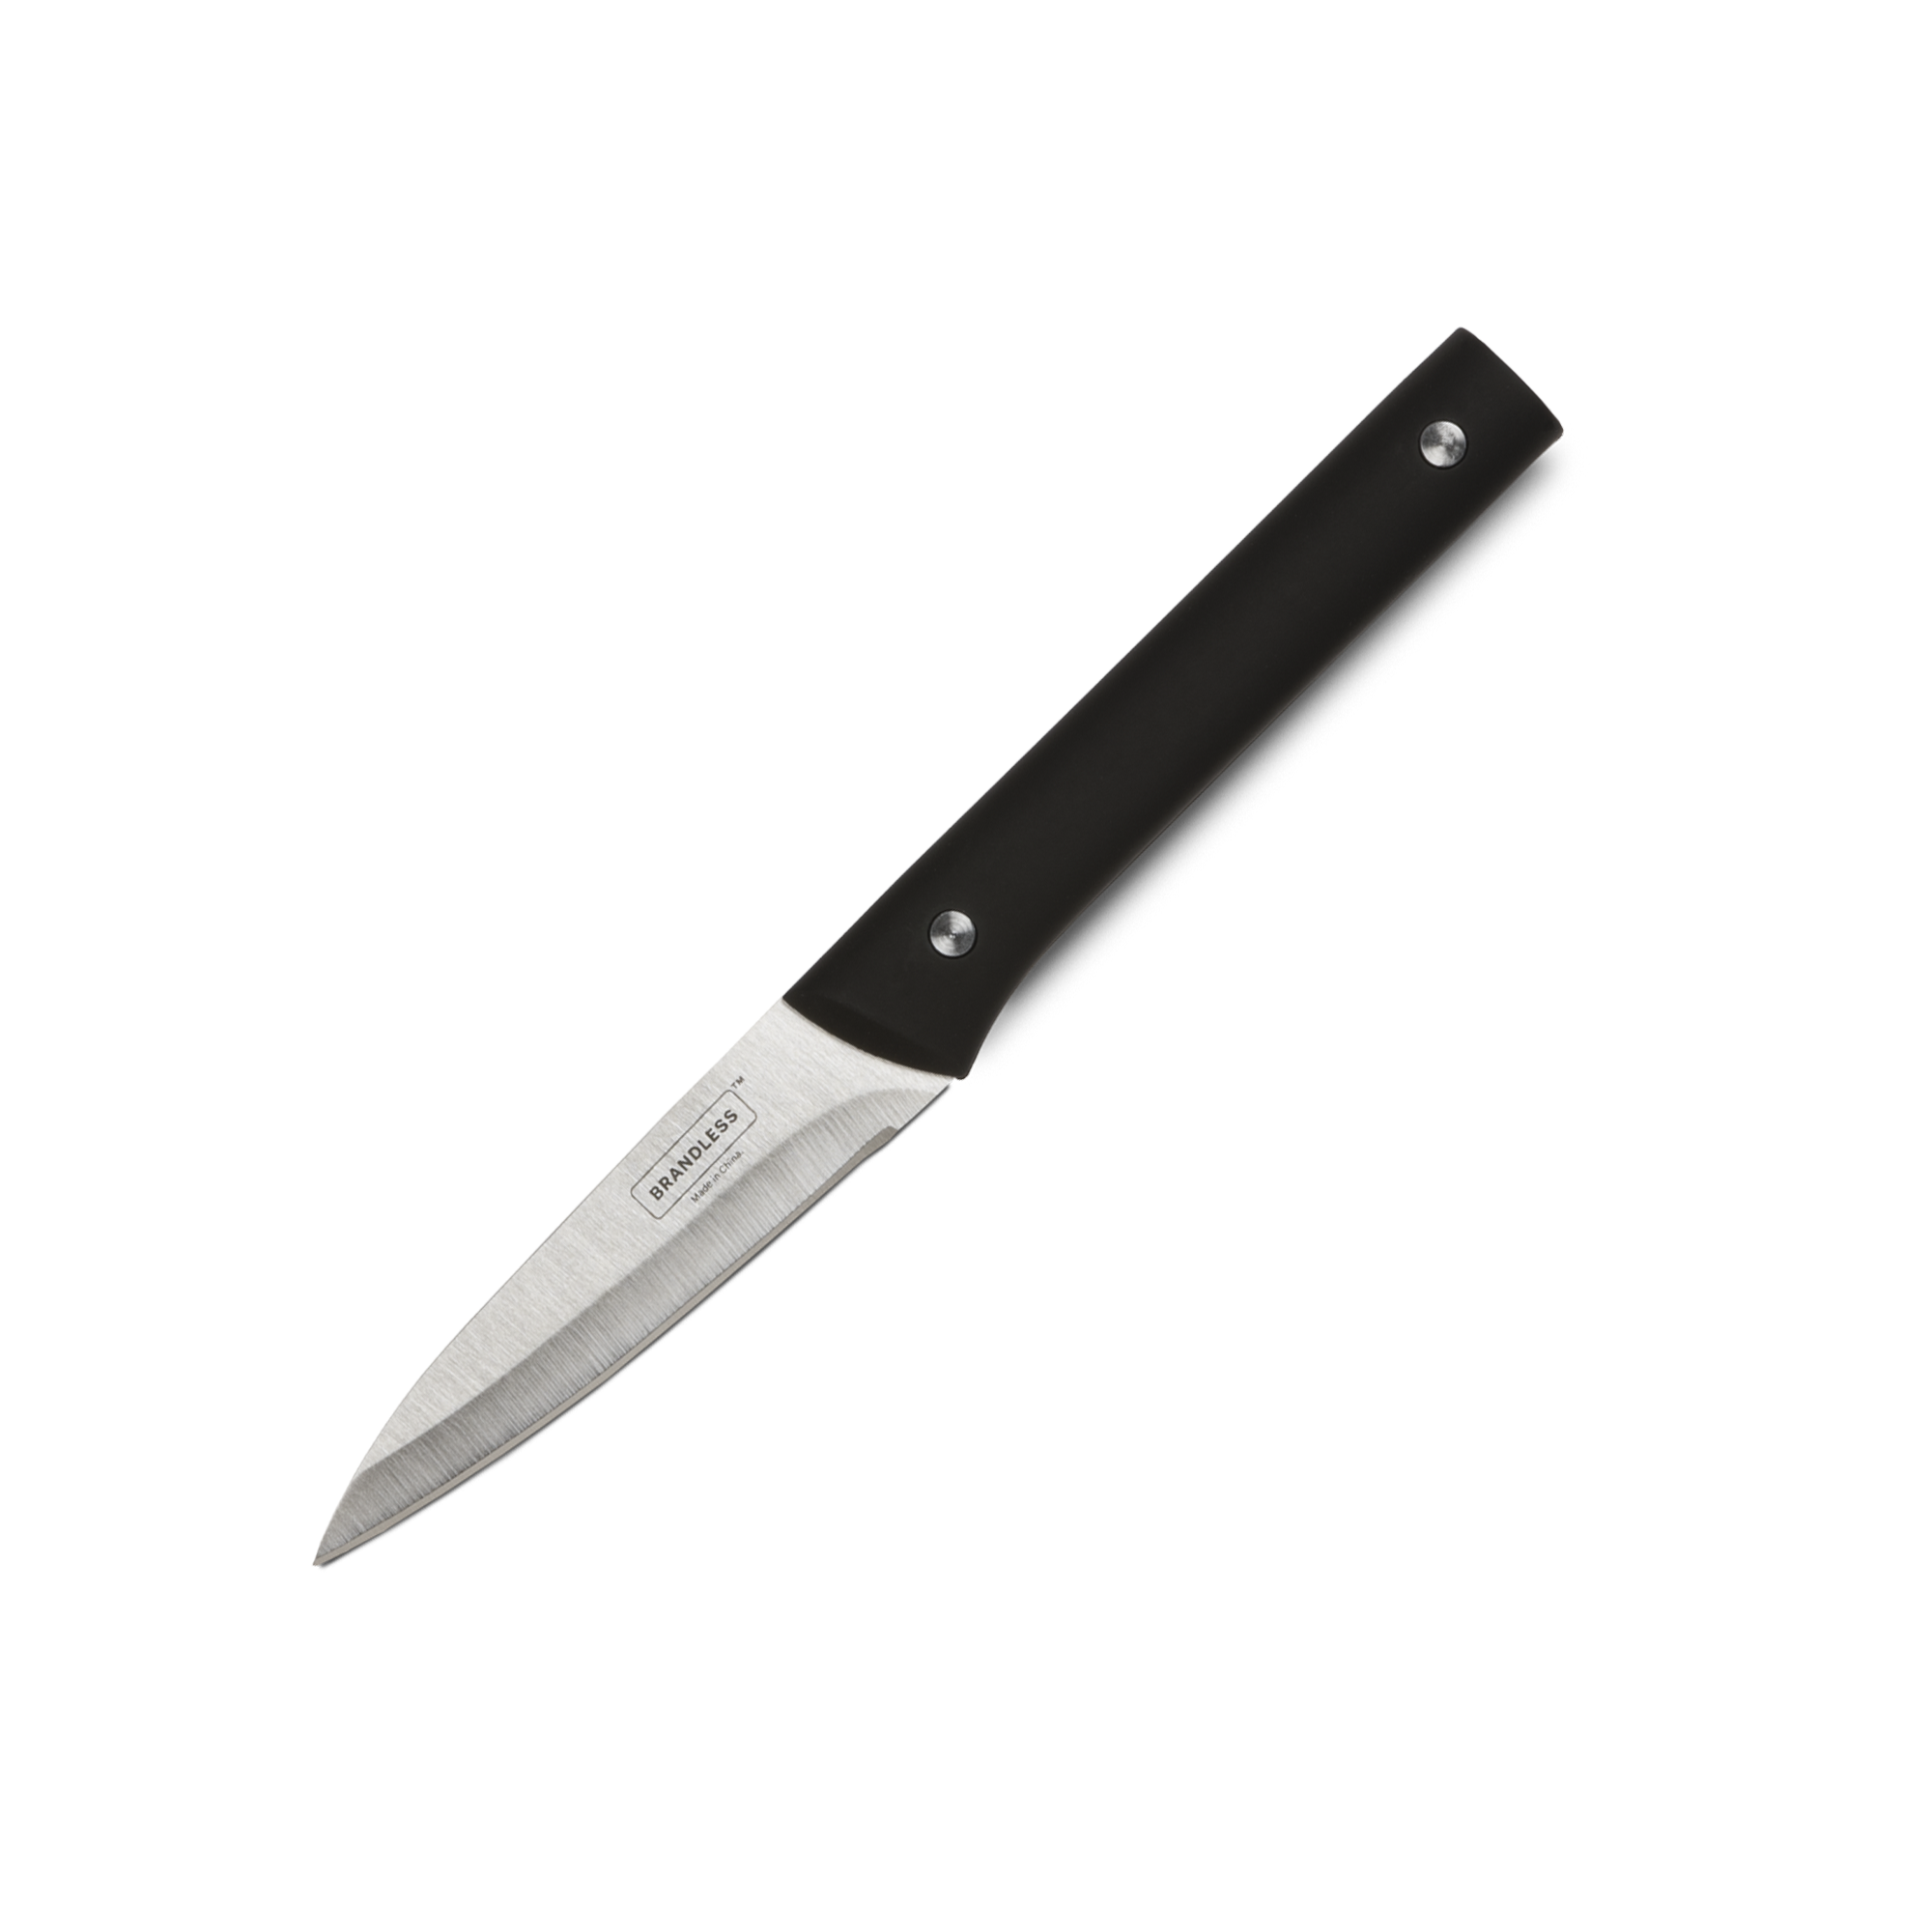 Product photo, paring knife.